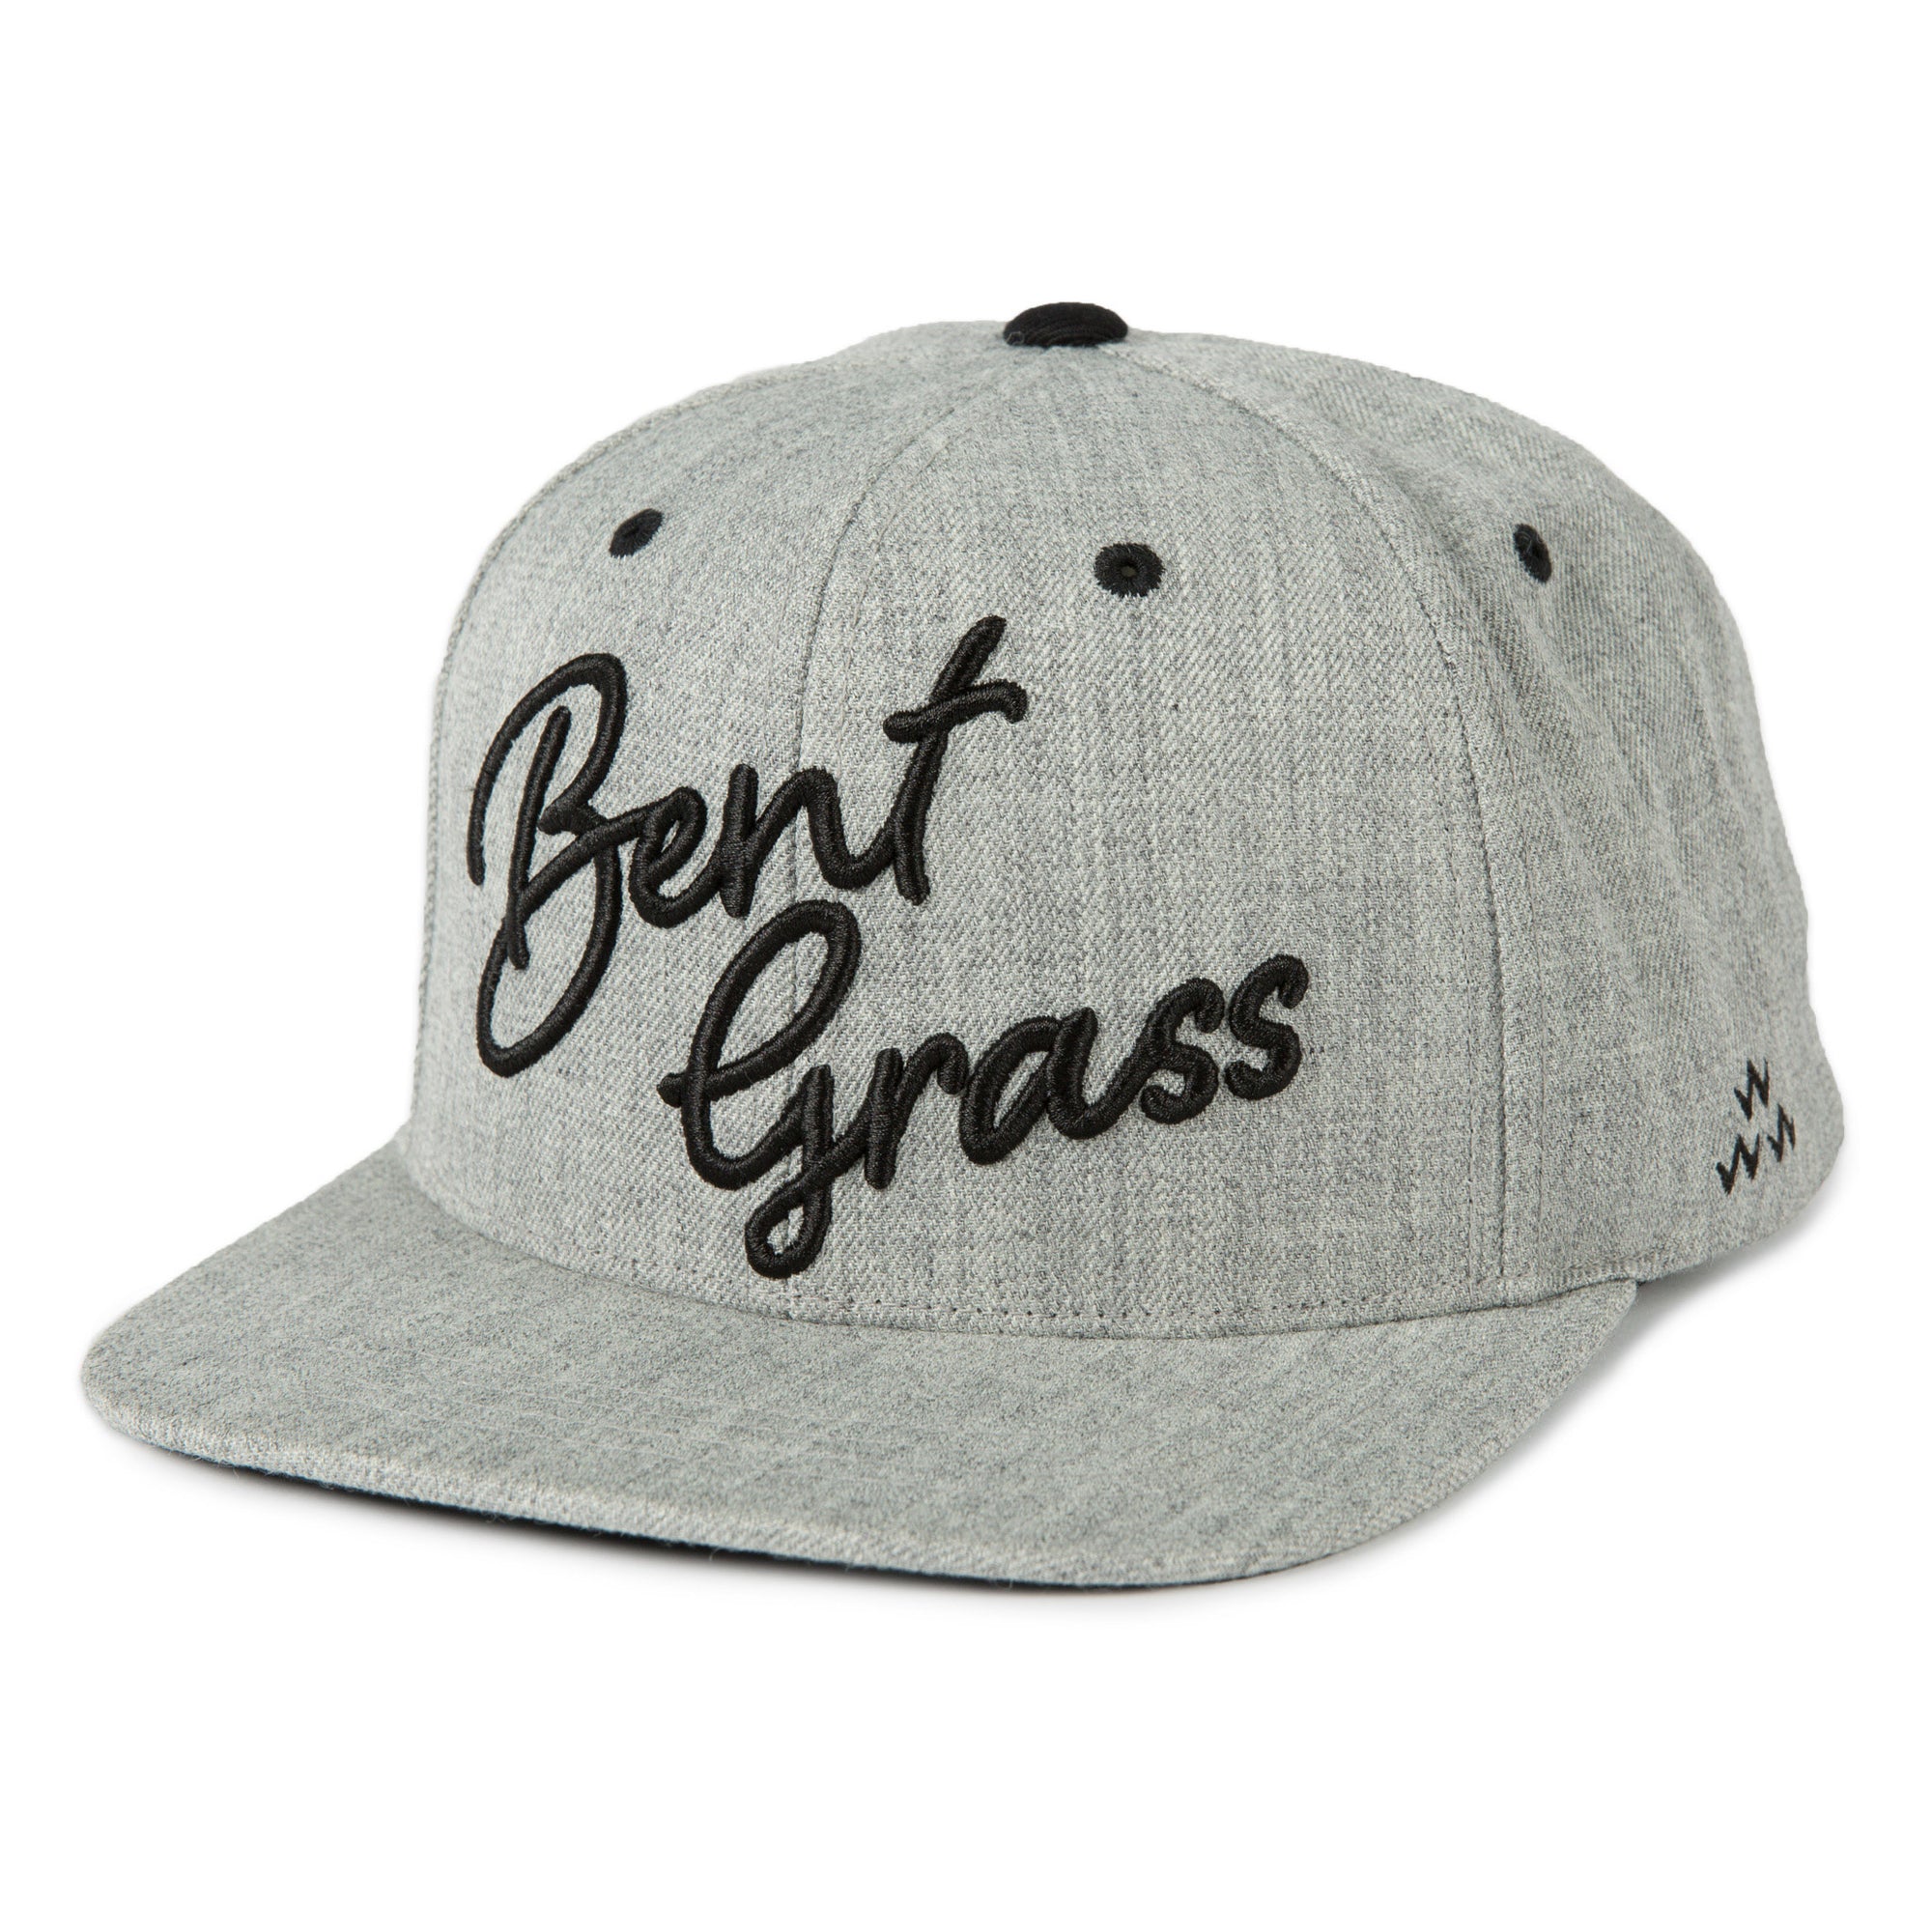 birds-of-condor-grey-golf-bent-grass-snapback-hat-front